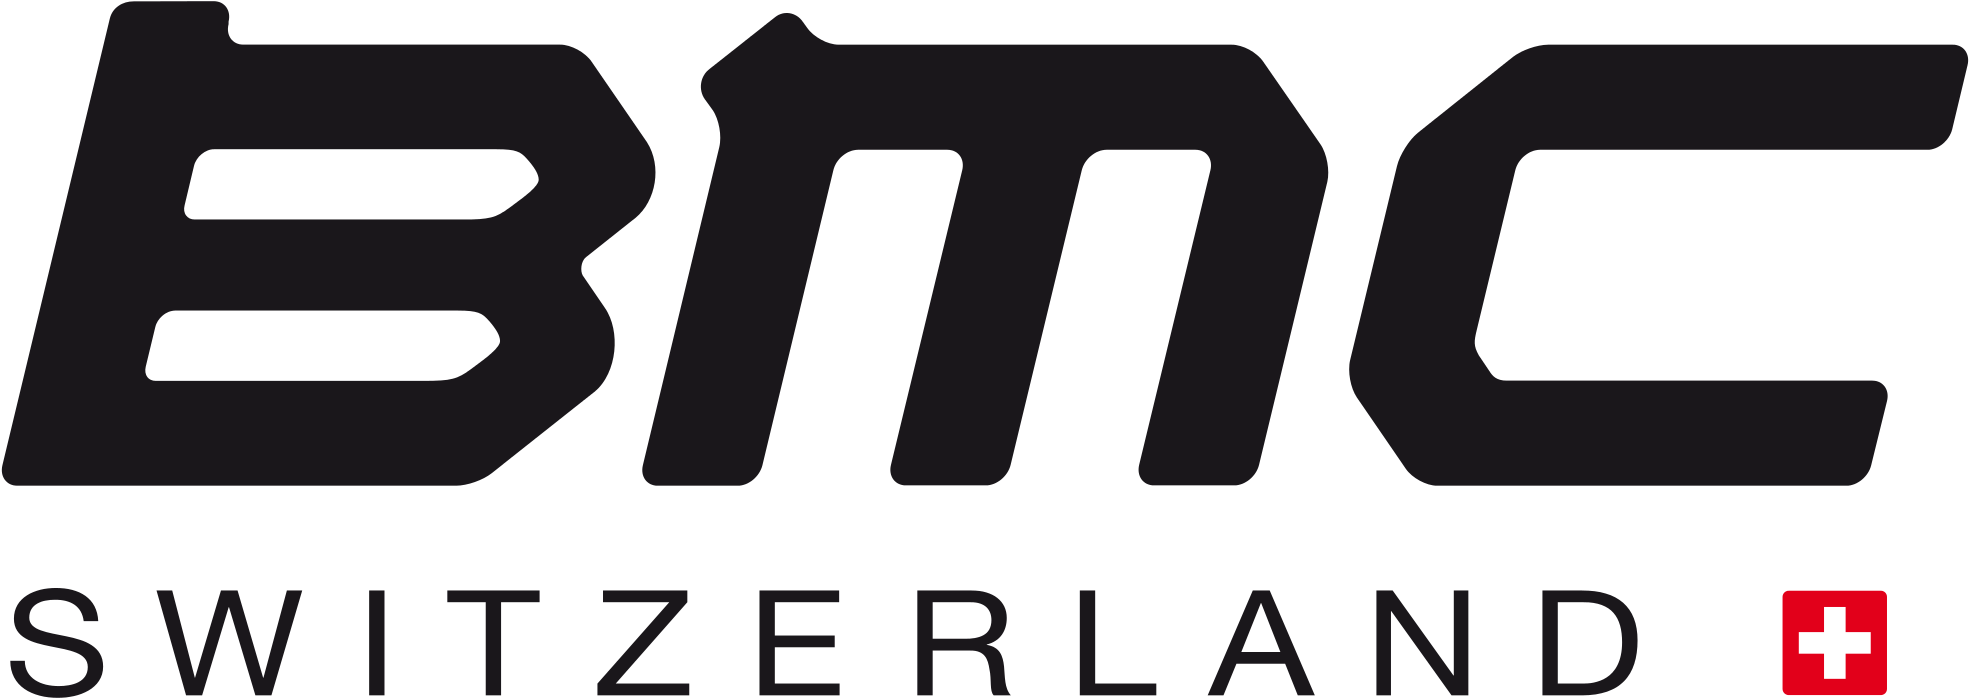 Bmc brand logo from switzerland.